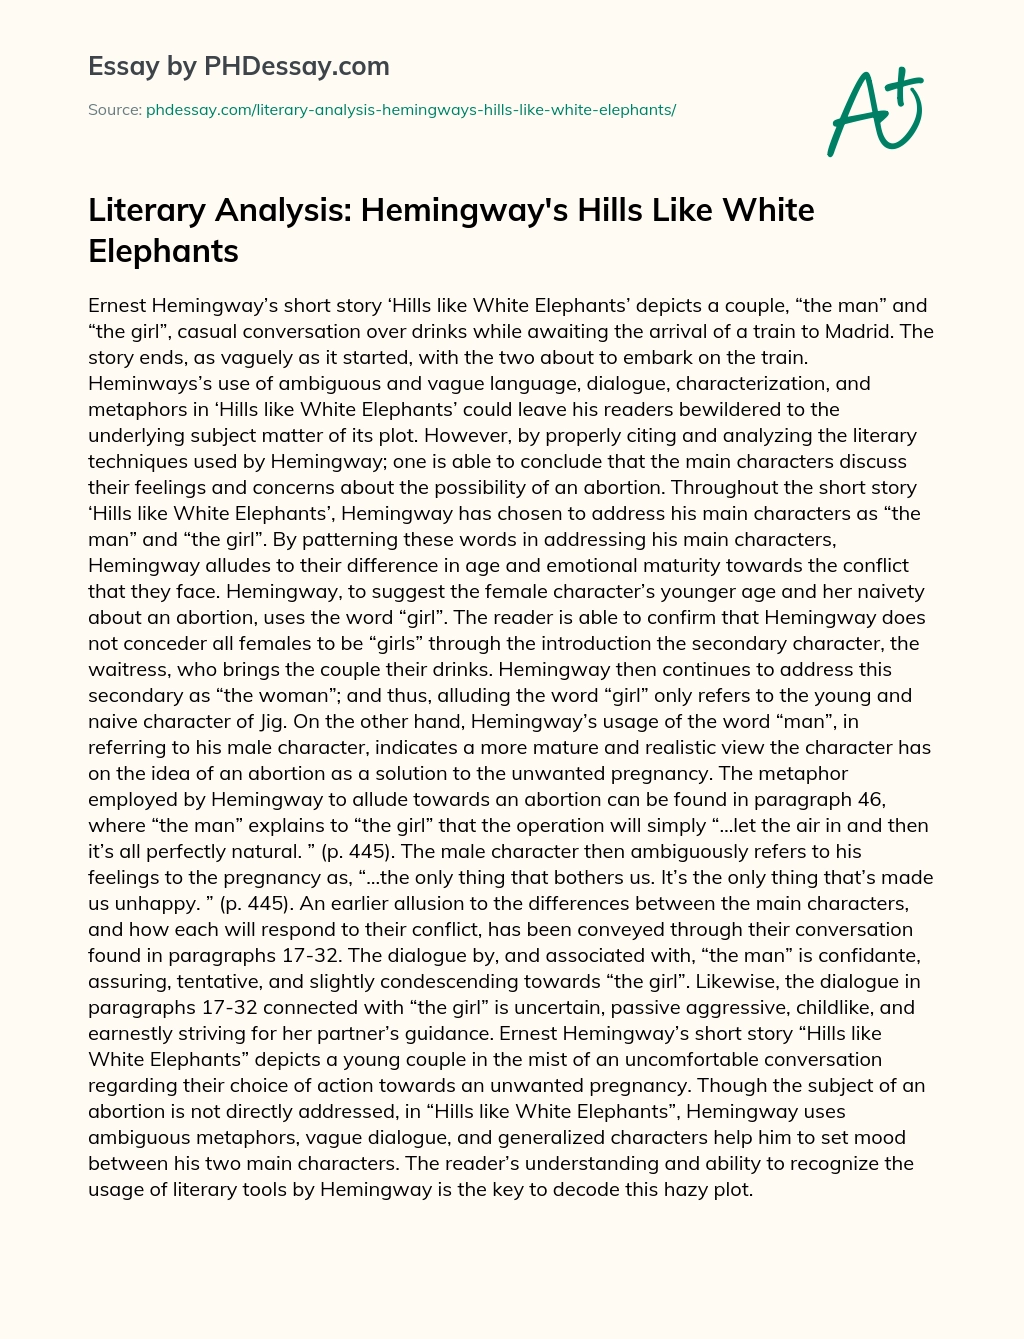 Literary Analysis: Hemingway’s Hills Like White Elephants essay